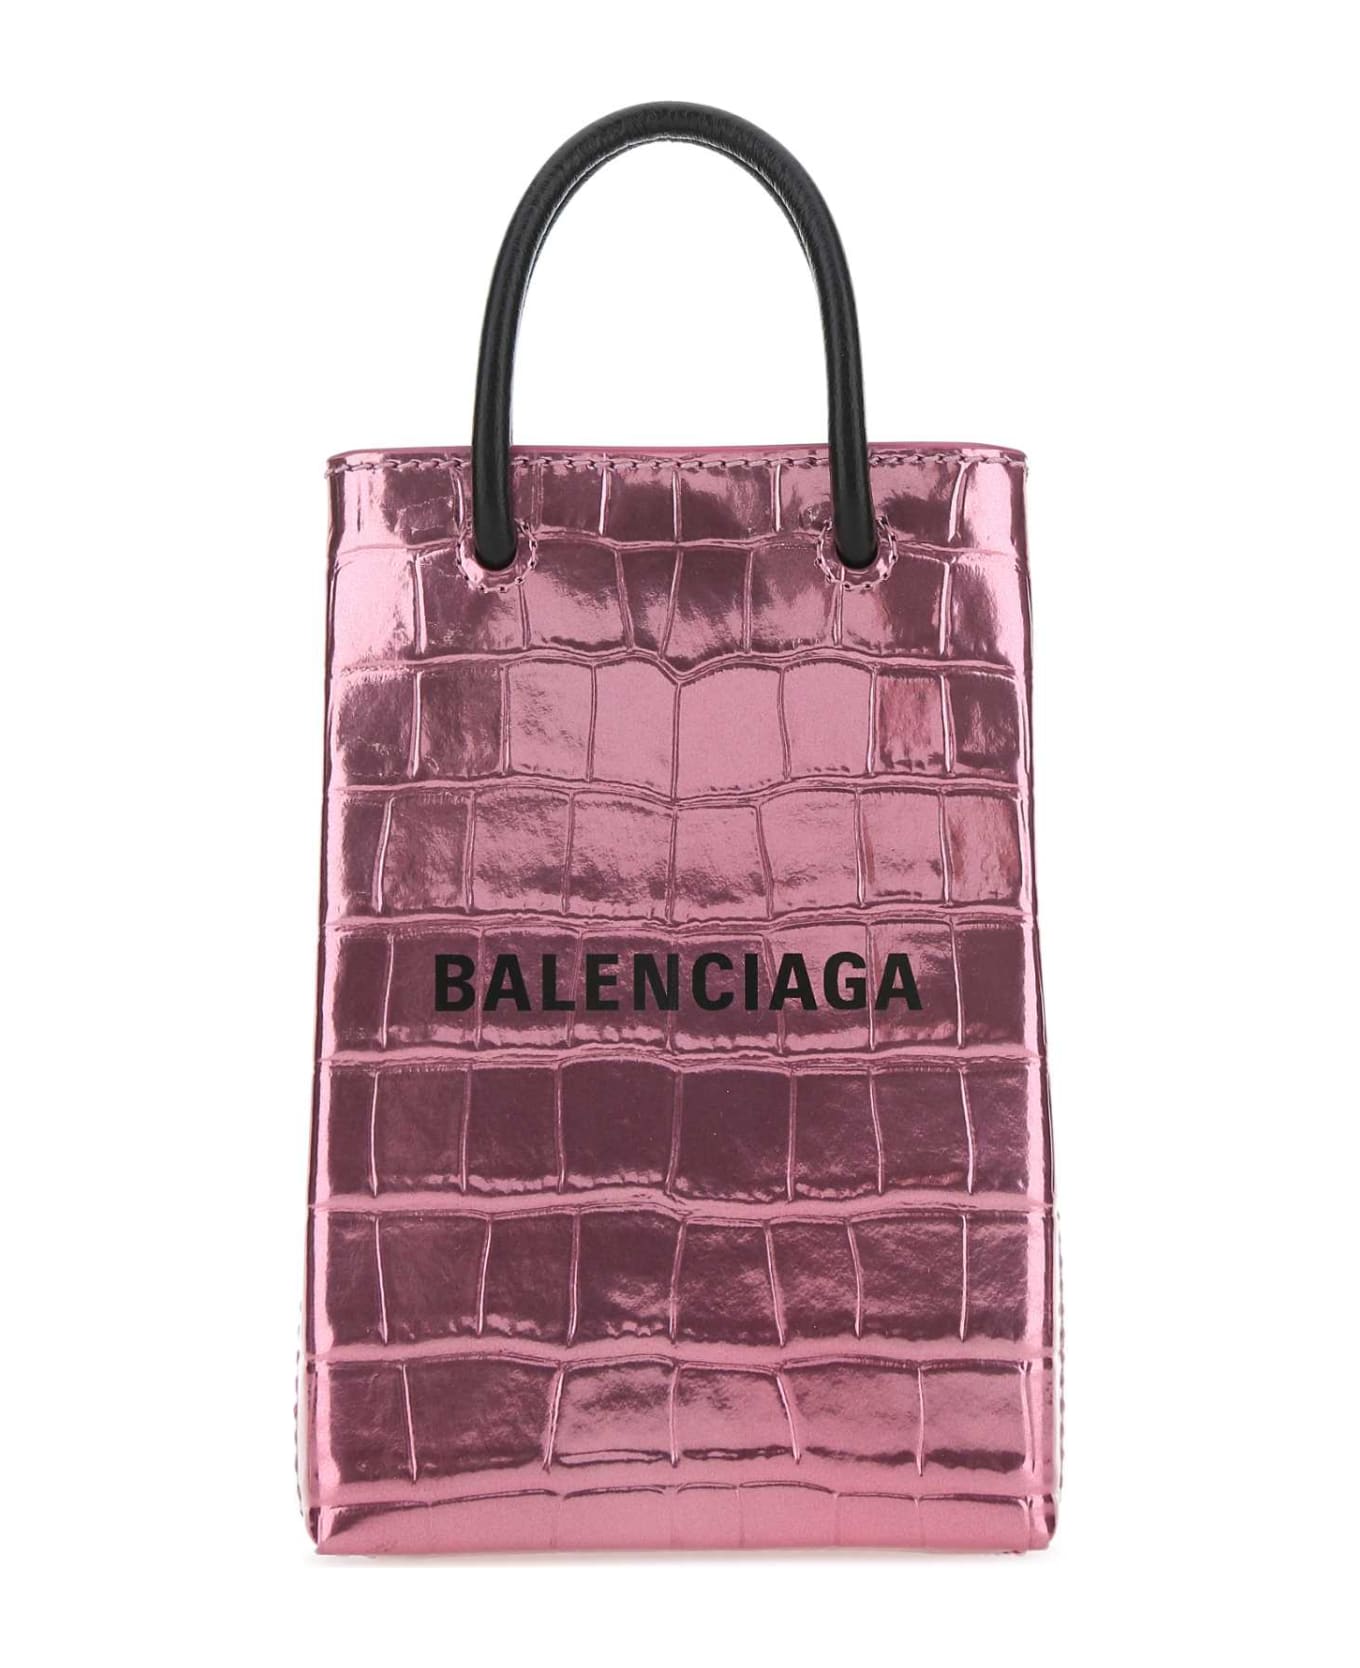 Balenciaga Pink Leather Phone Case - 6260